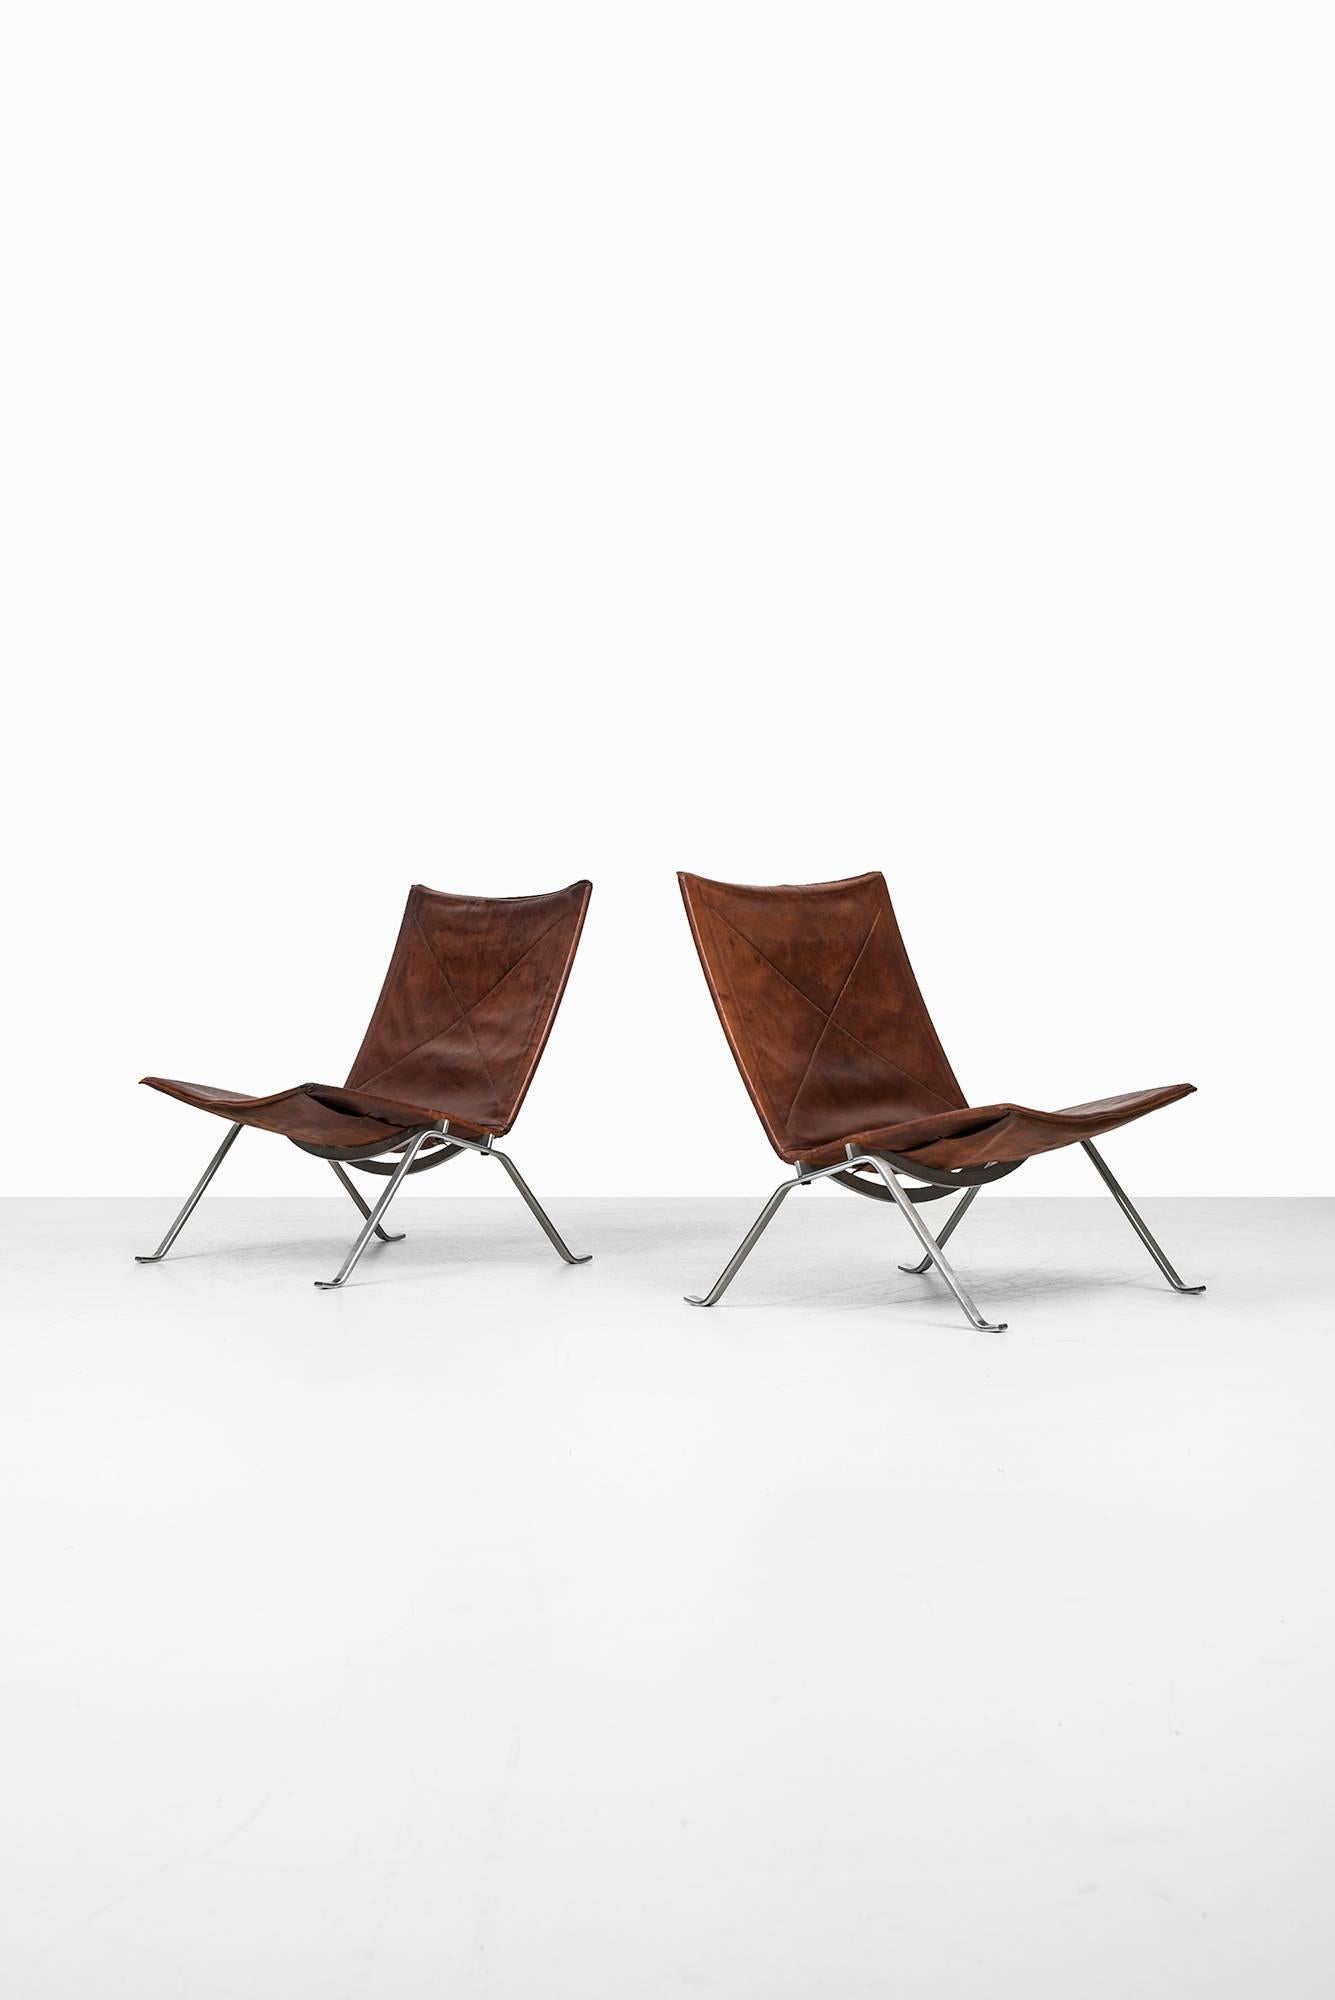 Leather Poul Kjærholm, a Set of Four PK-22 Easy Chairs by E. Kold Christensen in Denmark